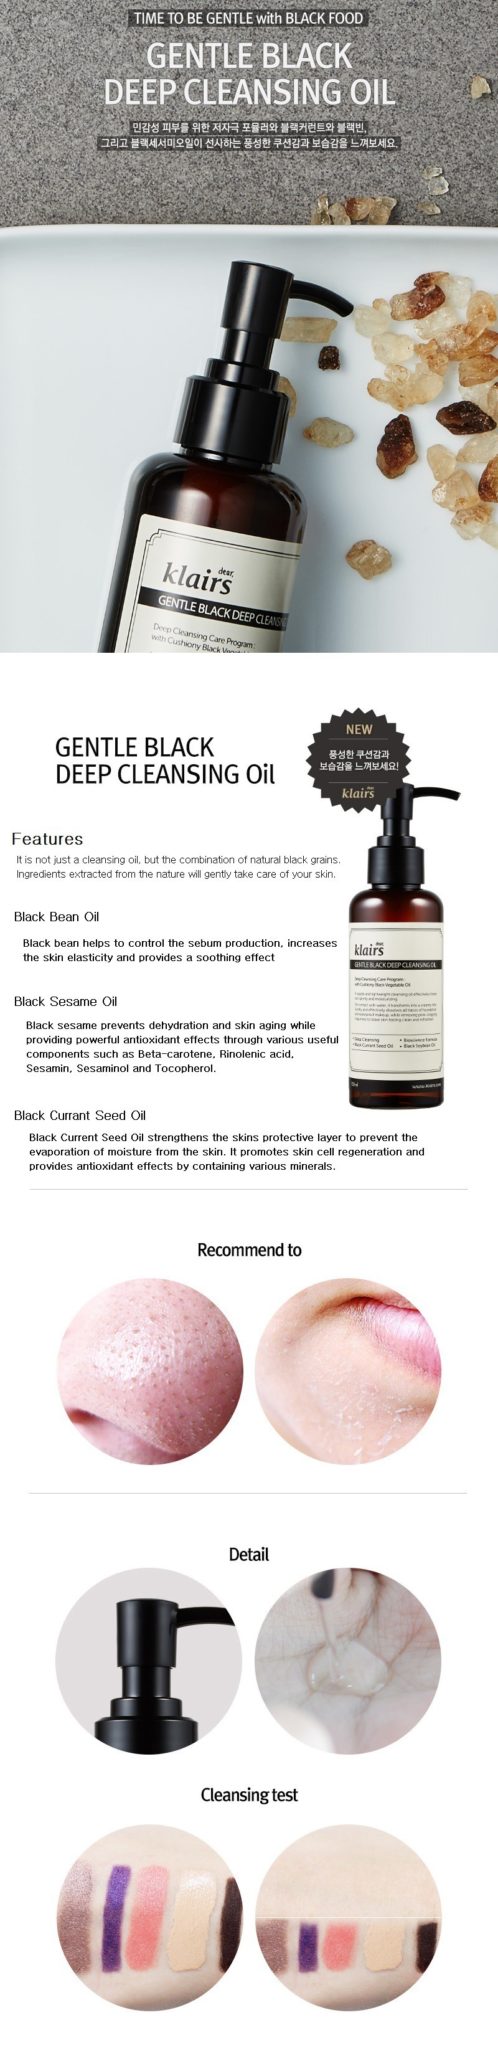 Image result for klairs gentle black deep cleansing oil